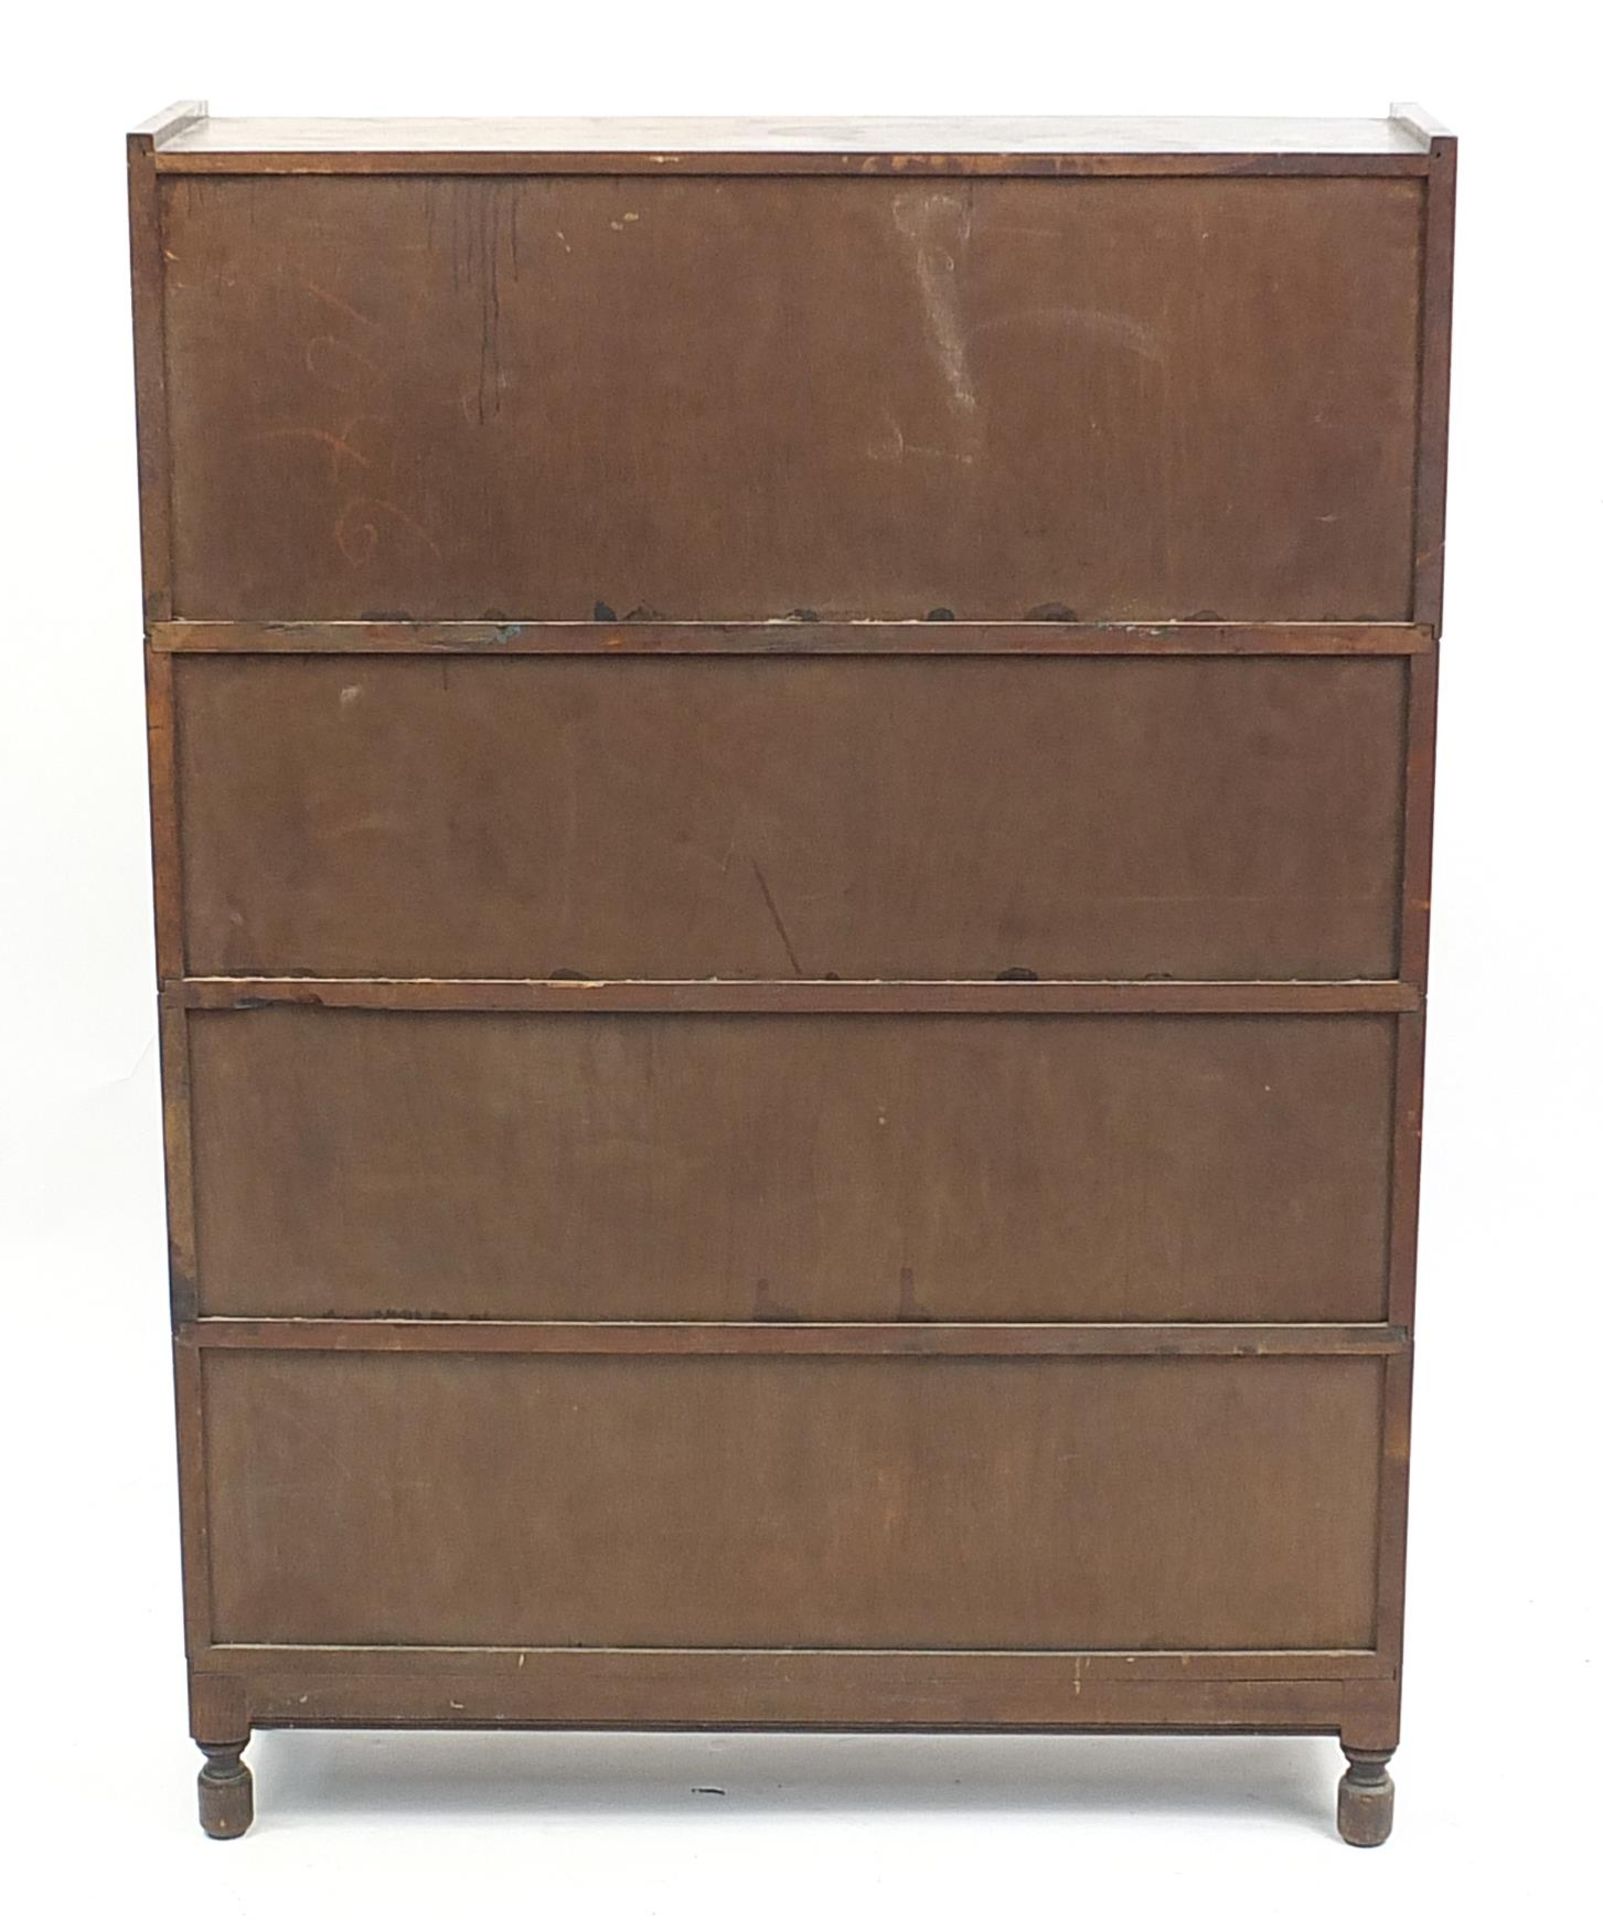 Oak four tier Globe Wernicke style bookcase, 125cm H x 89cm W x 25.5cm D - Image 3 of 3